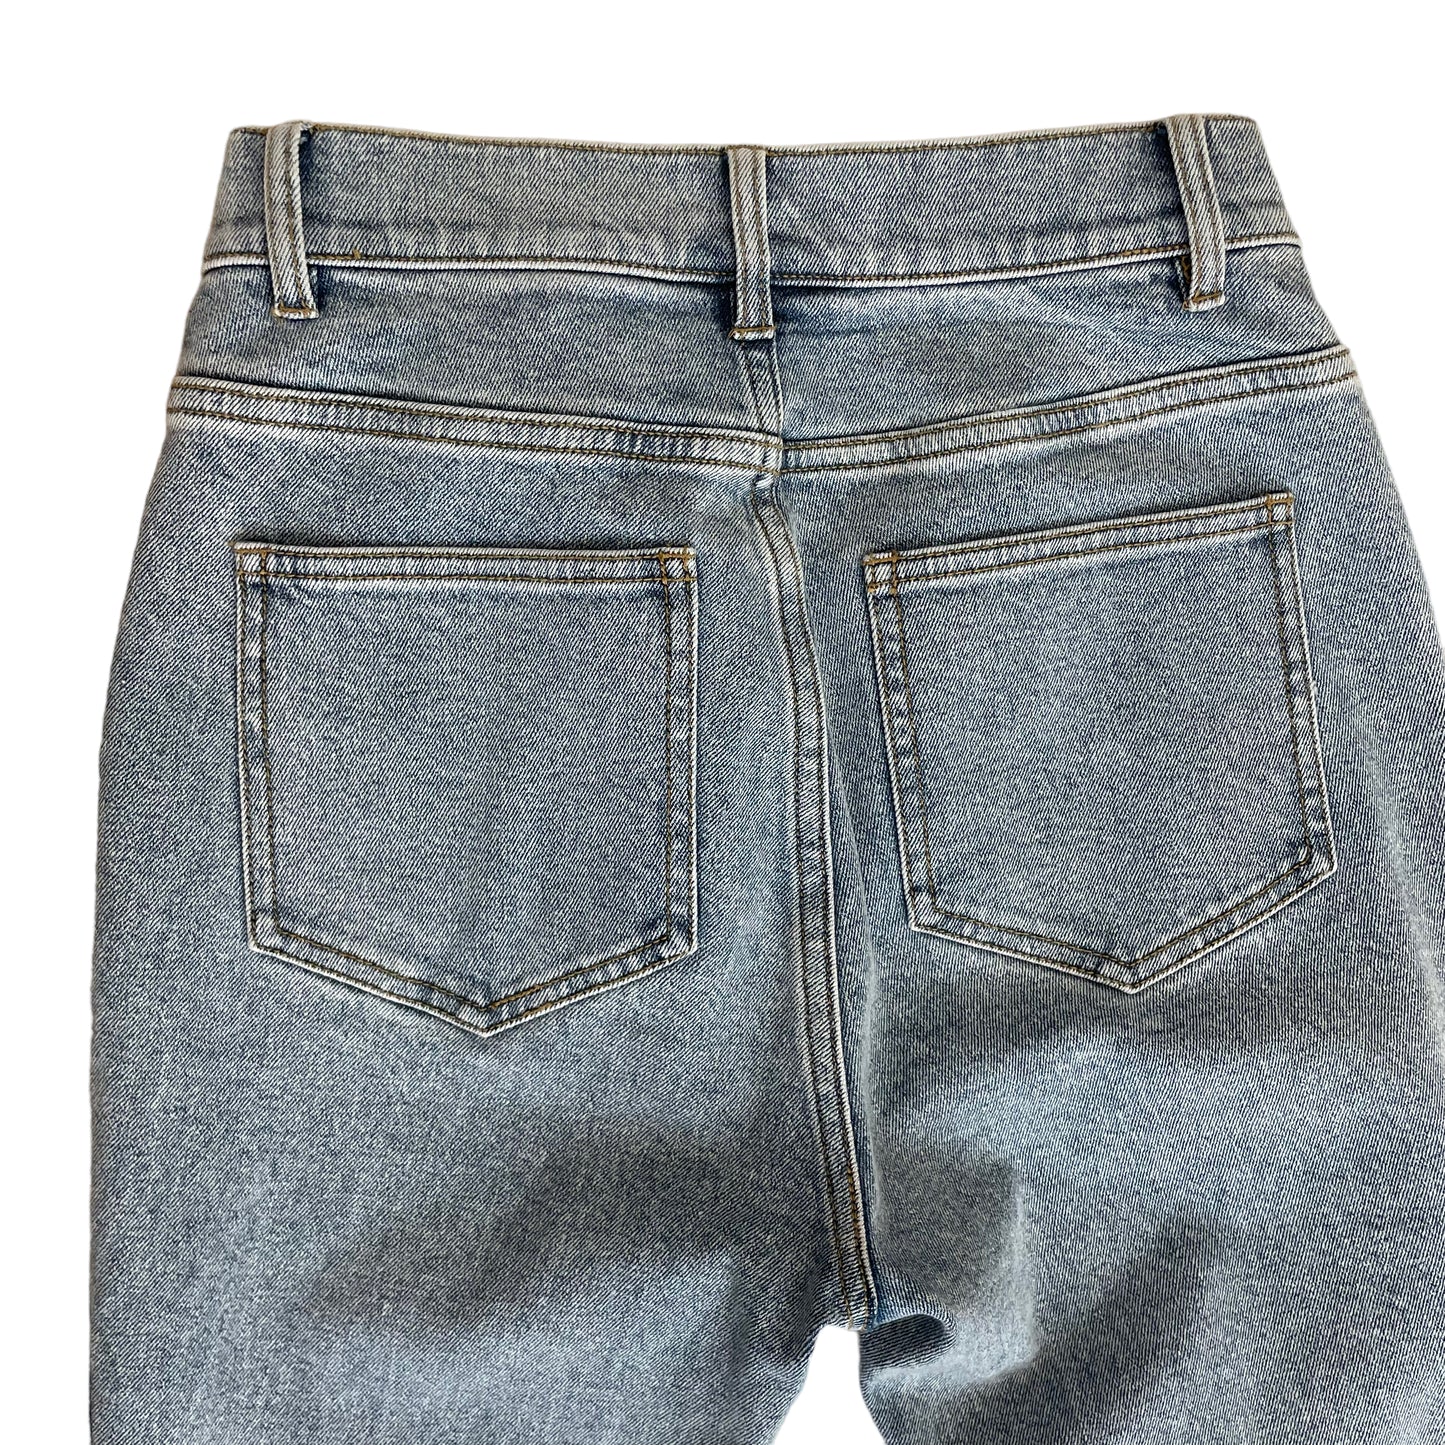 Light Wash Denim Jeans - 4